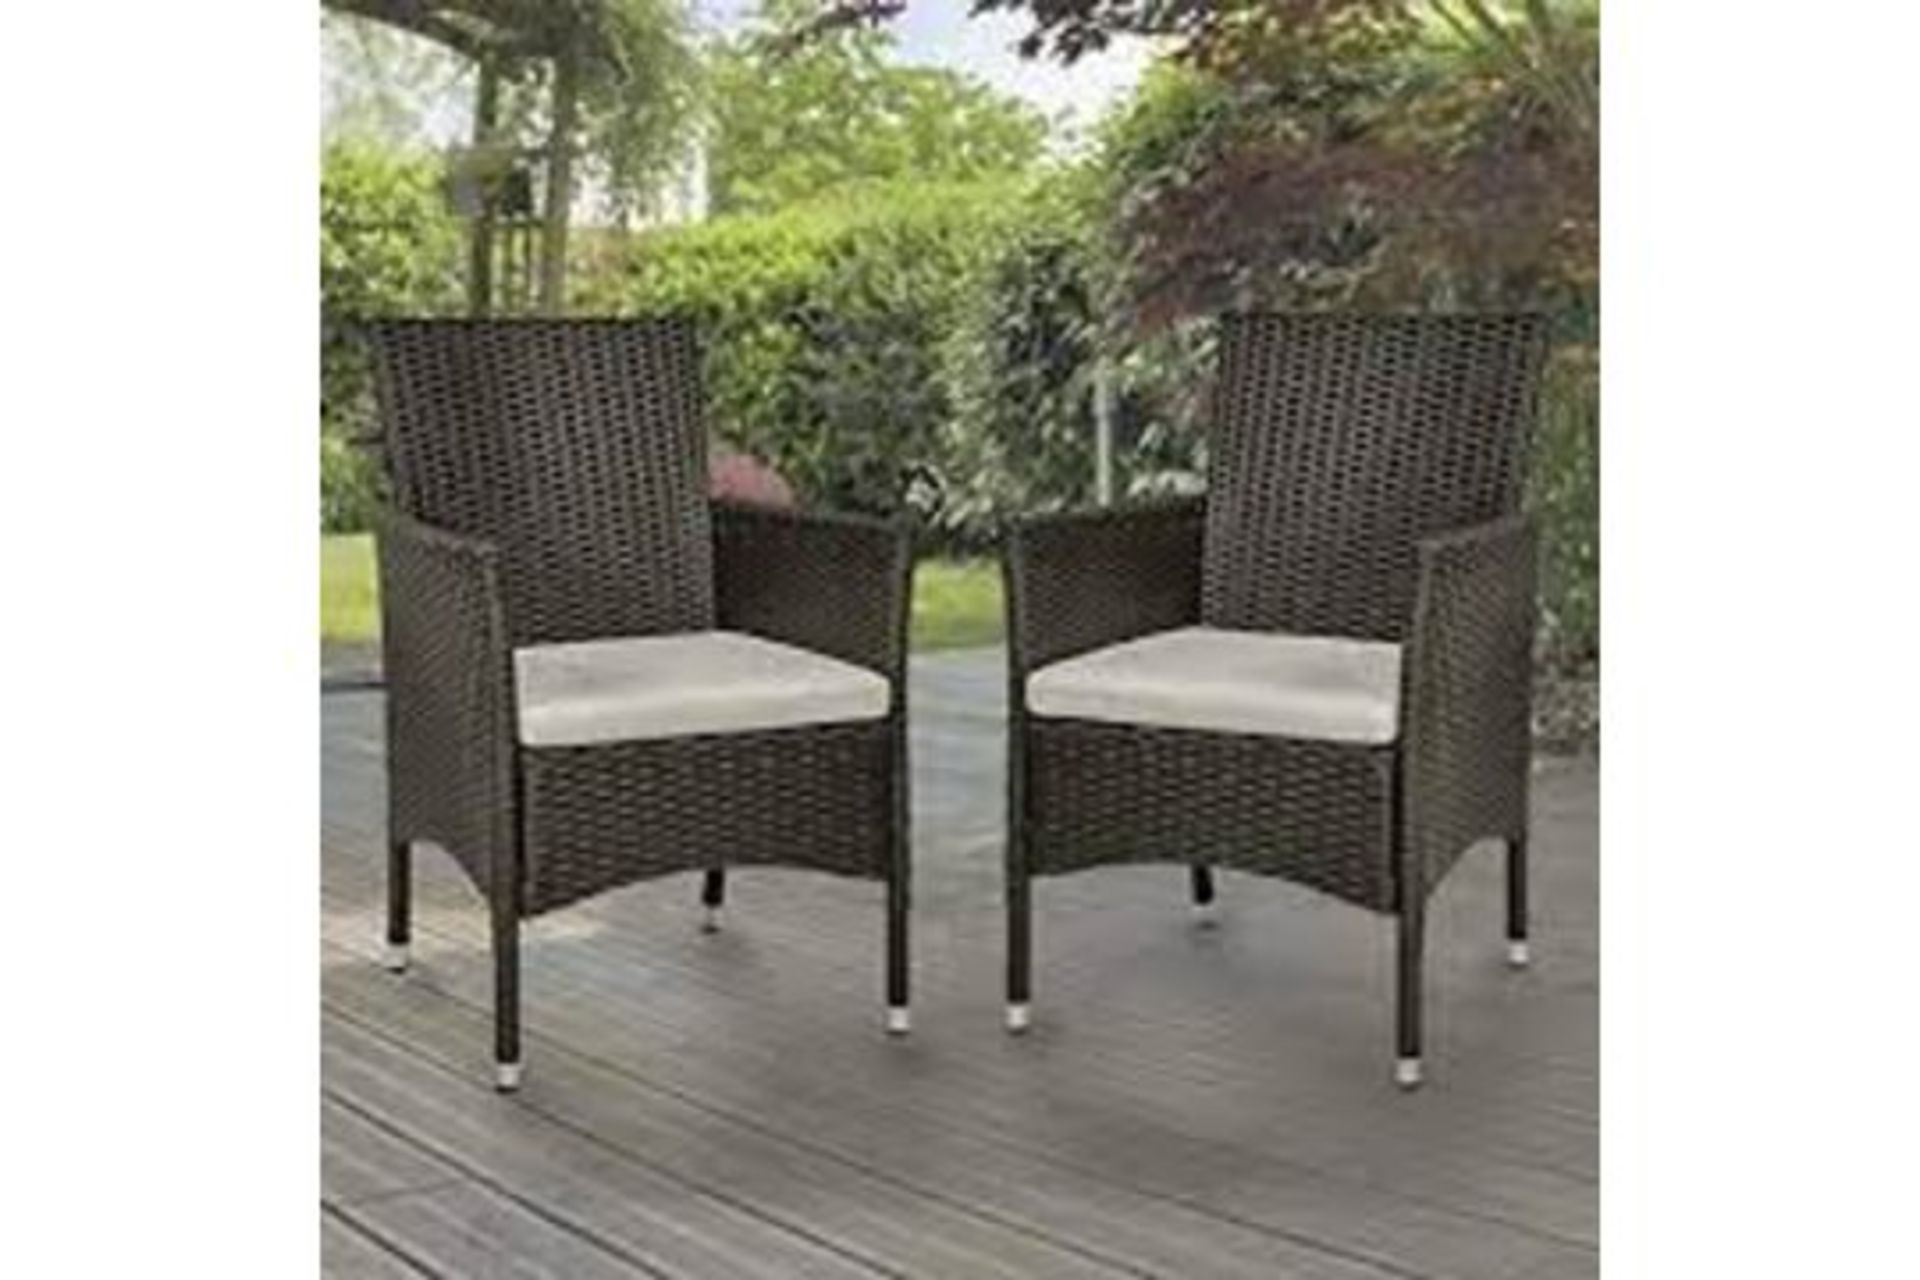 Brand New 2 Piece Rattan Garden Chairs Set RRP £219.00 - ROW1 -4